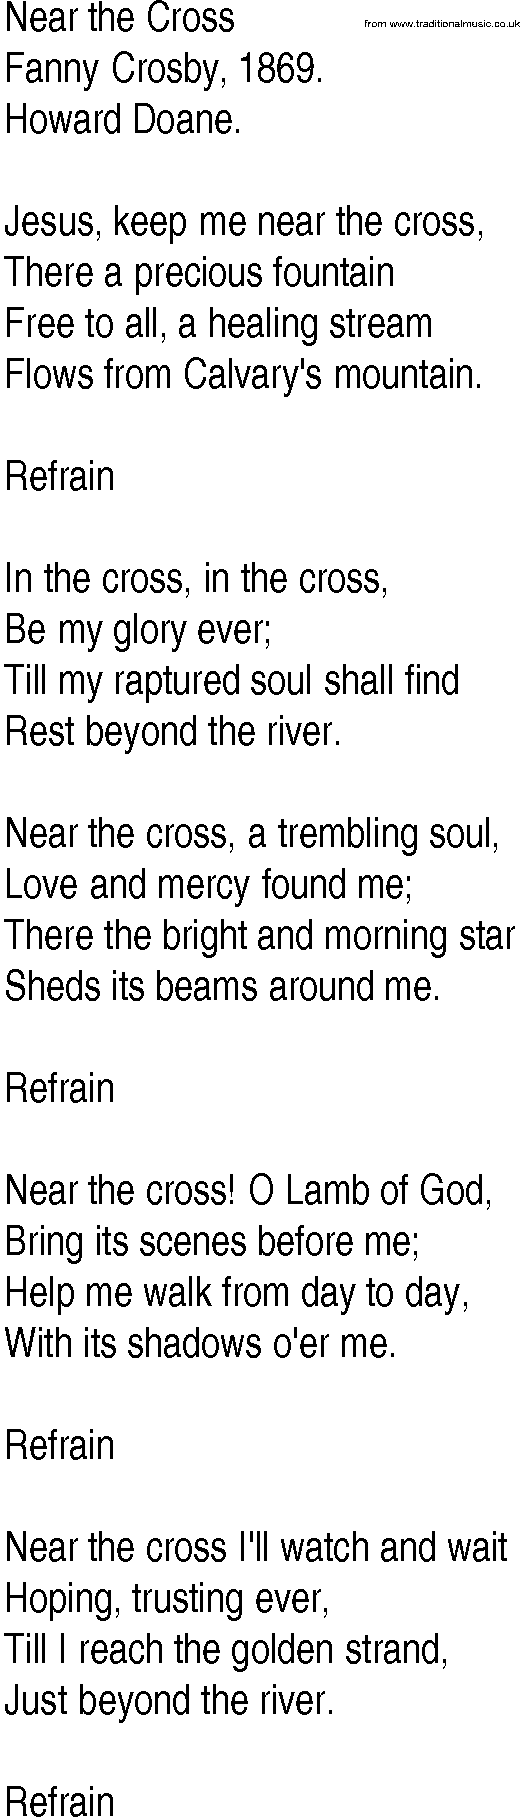 Hymn and Gospel Song: Near the Cross by Fanny Crosby lyrics